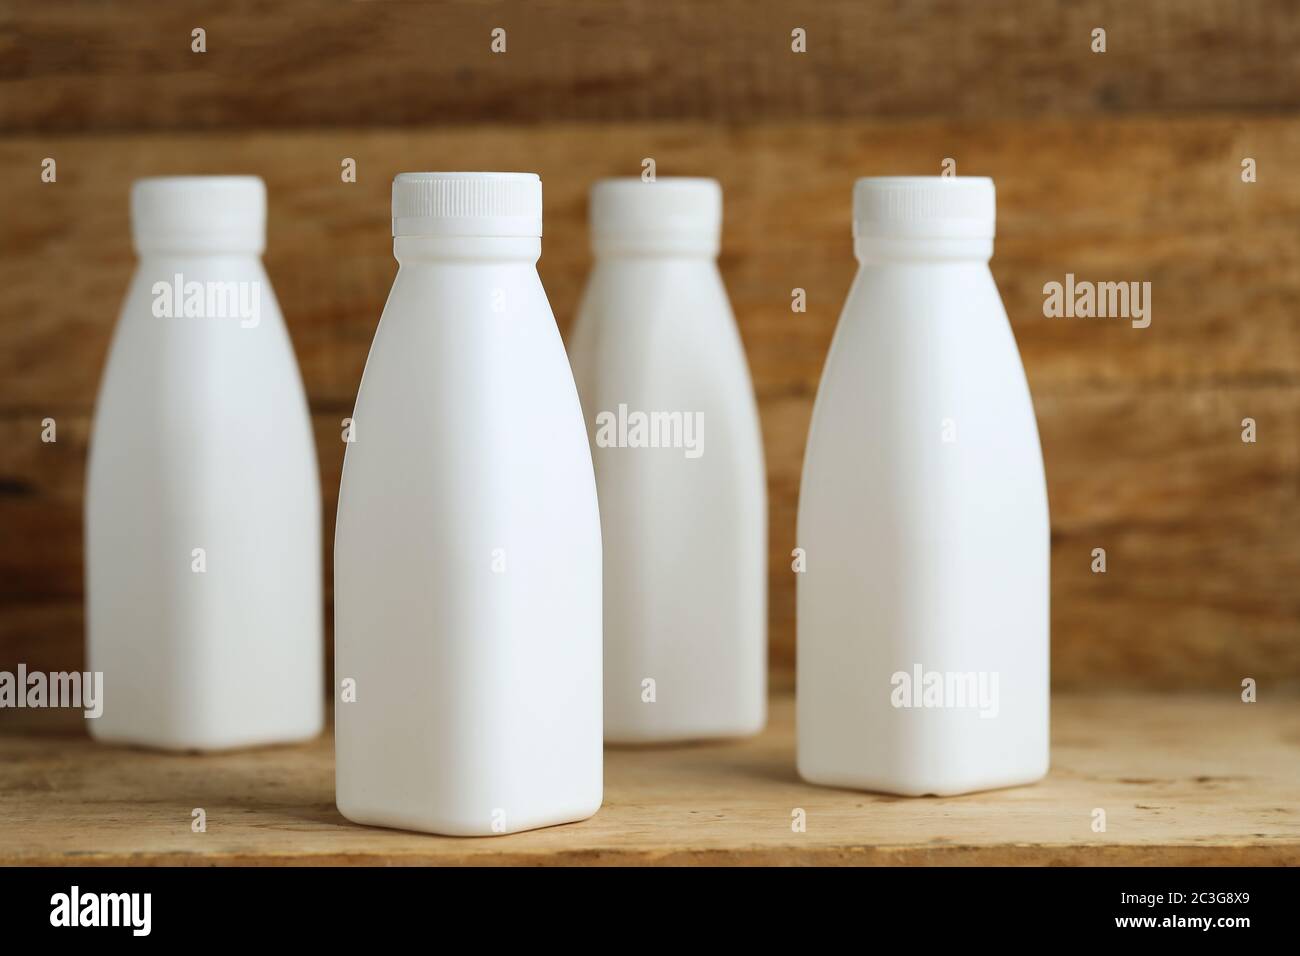 https://c8.alamy.com/comp/2C3G8X9/white-plastic-milk-bottles-on-retro-wooden-table-background-2C3G8X9.jpg